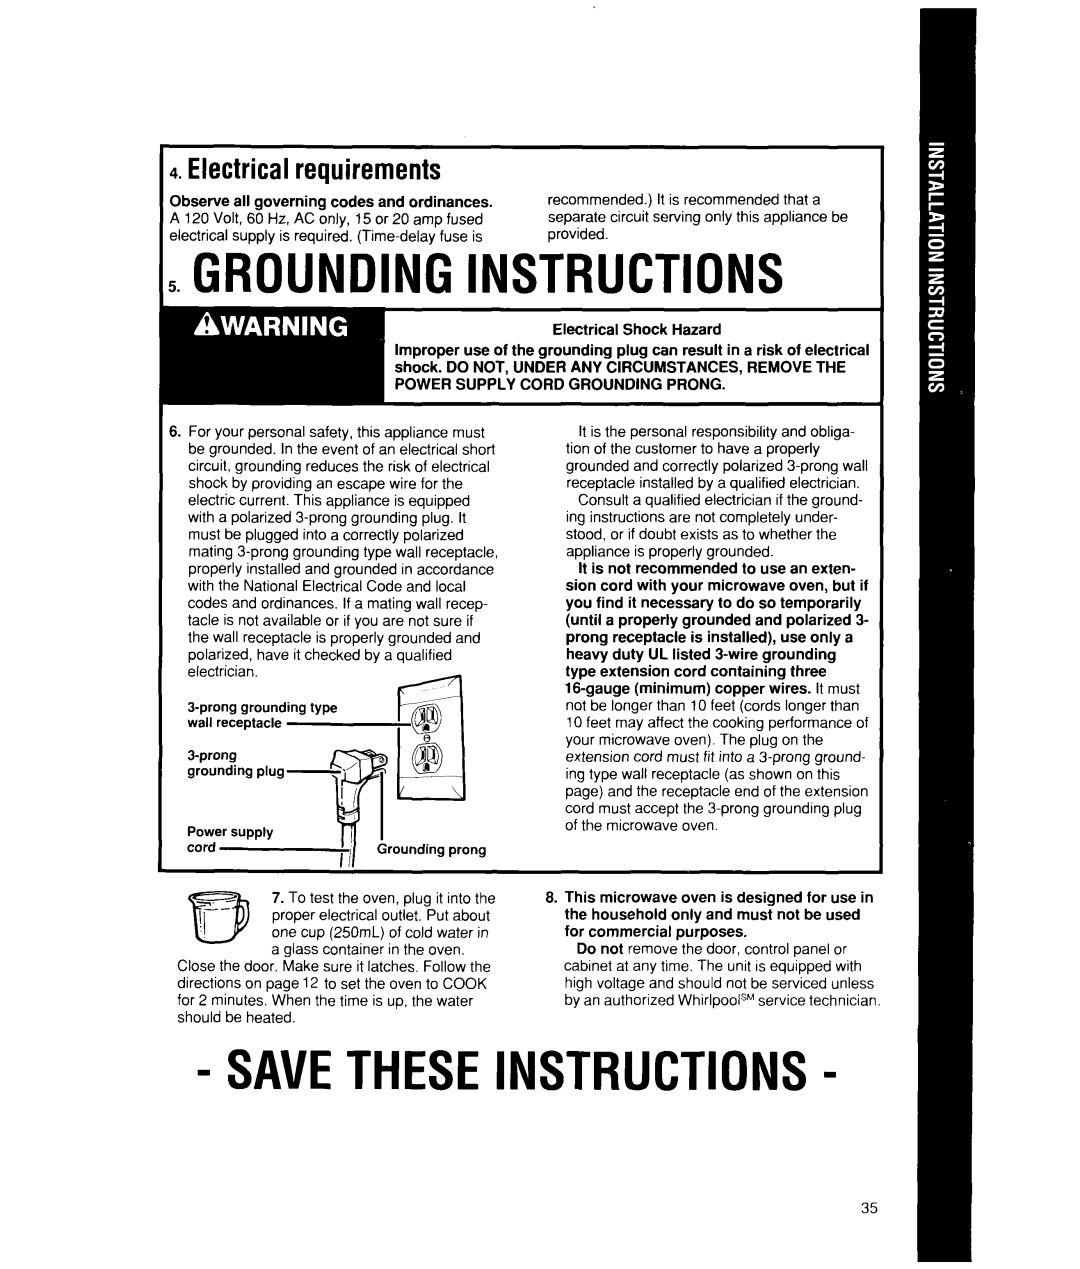 Whirlpool MW7500XW manual Groundinginstructions, Savetheseinstructions, Electricalrequirements 